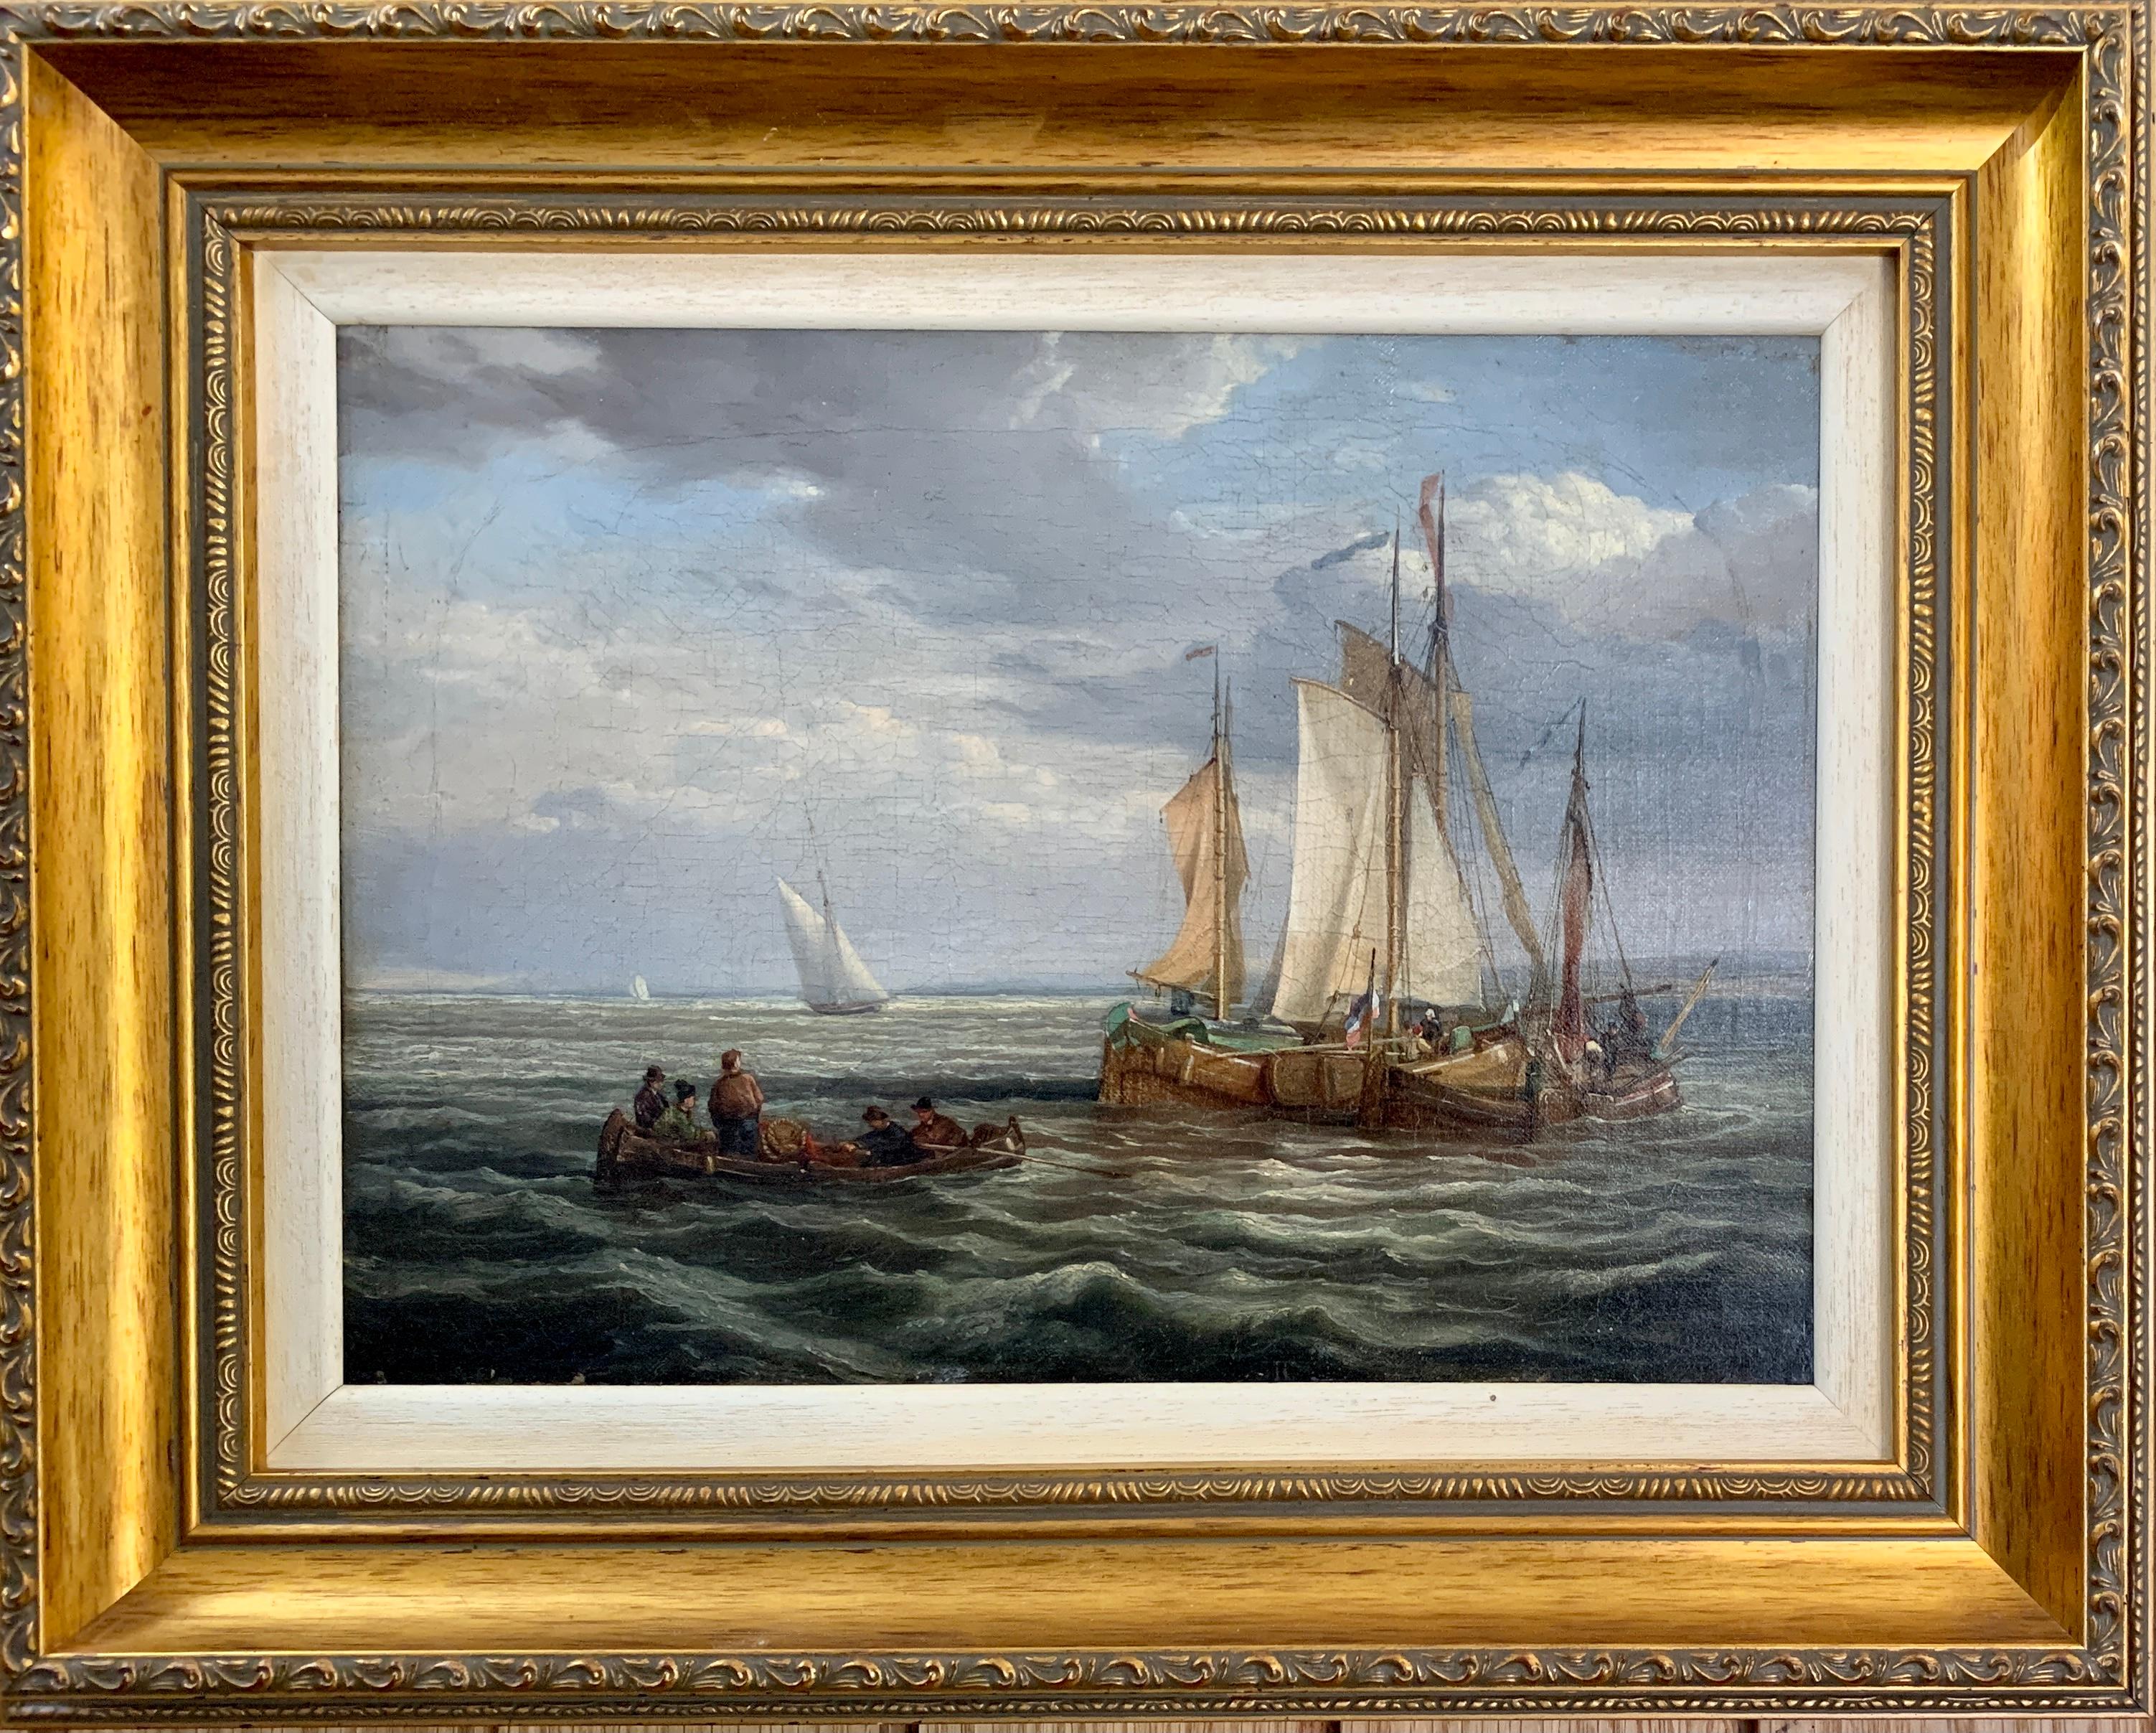 Antique Dutch 19th century ships at sea, fishing boats, men rowing.